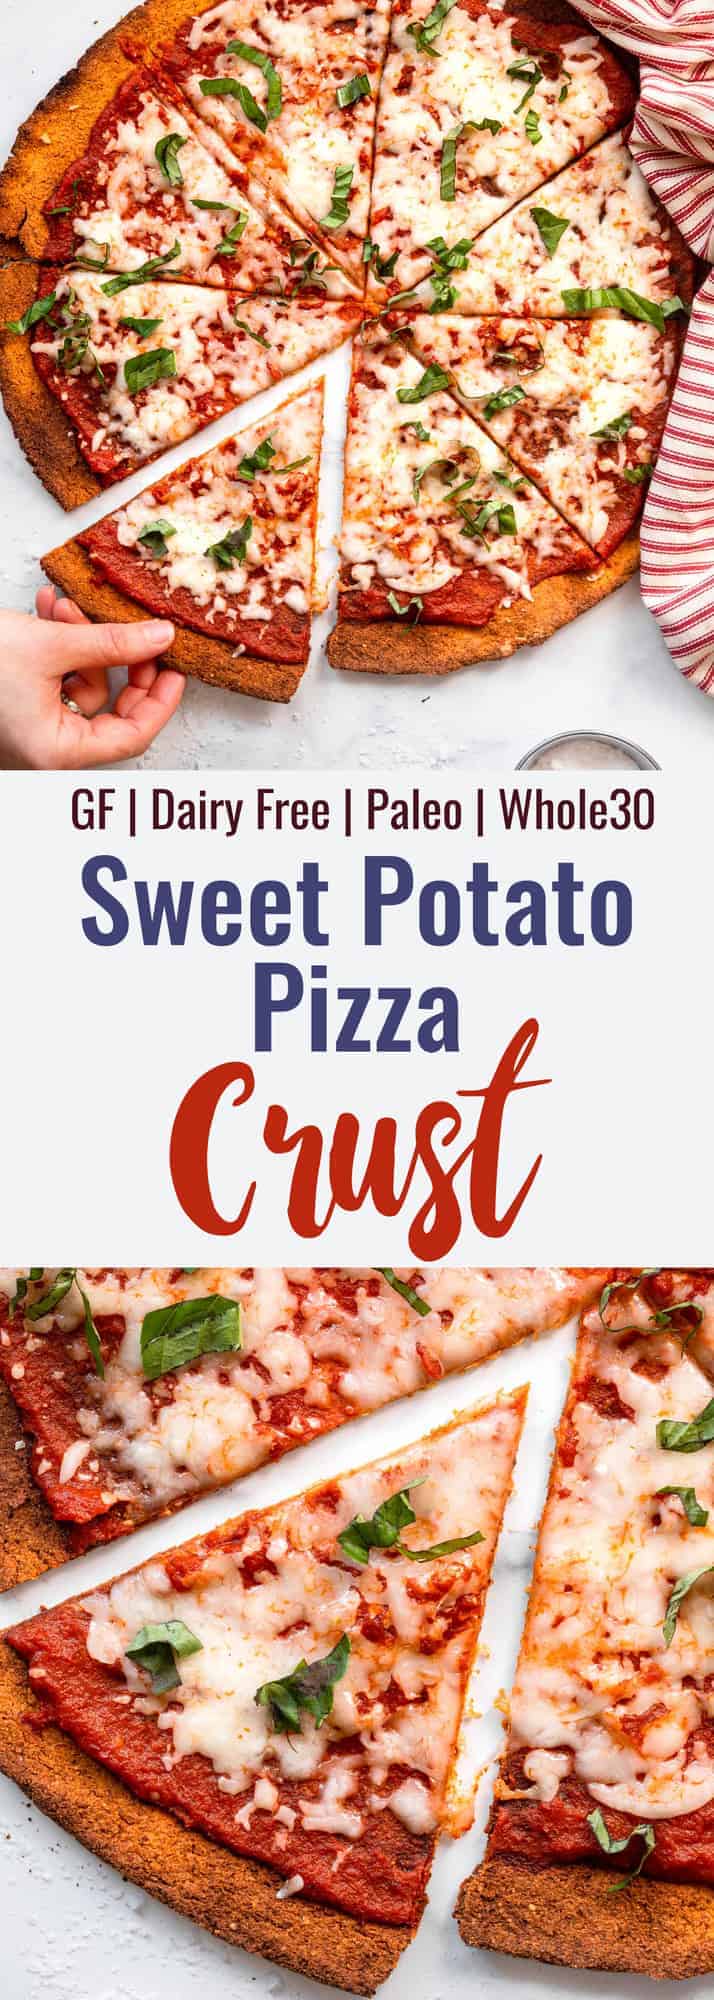 Sweet Potato pizza Crust collage photo